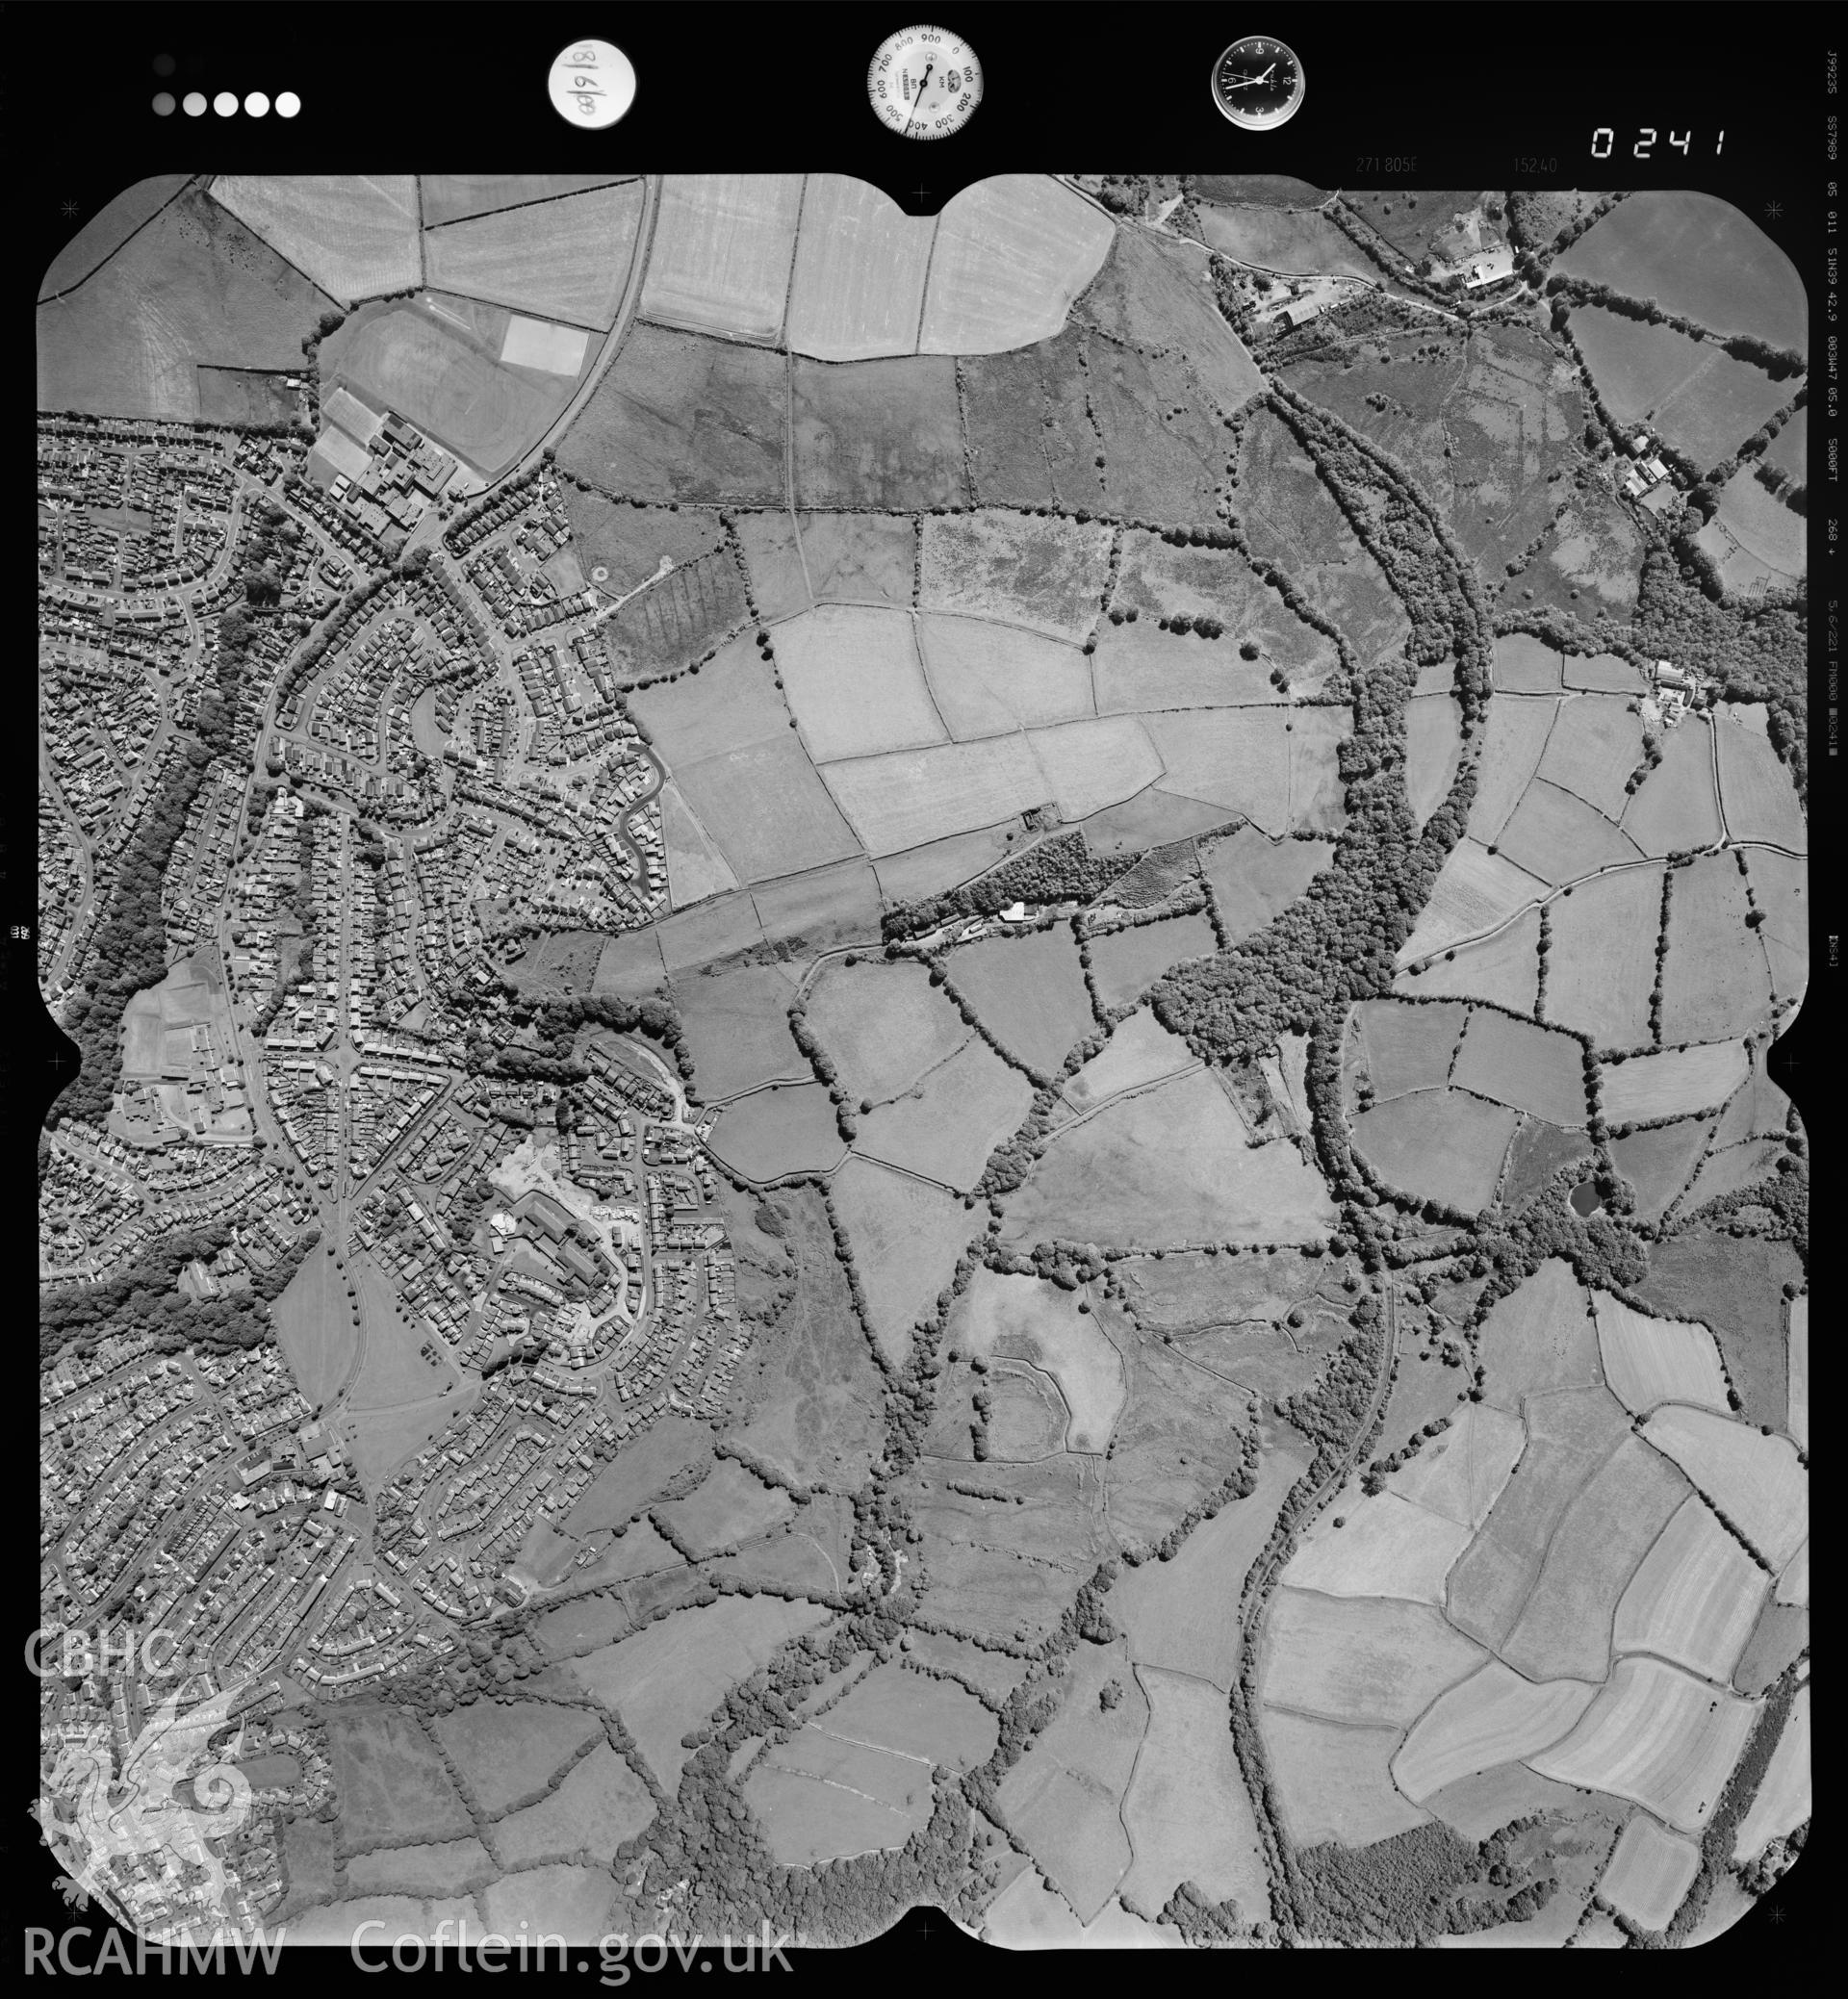 Digitized copy of an aerial photograph showing the Cimla area near Neath, Glamorgan, taken by Ordnance Survey, 2000.